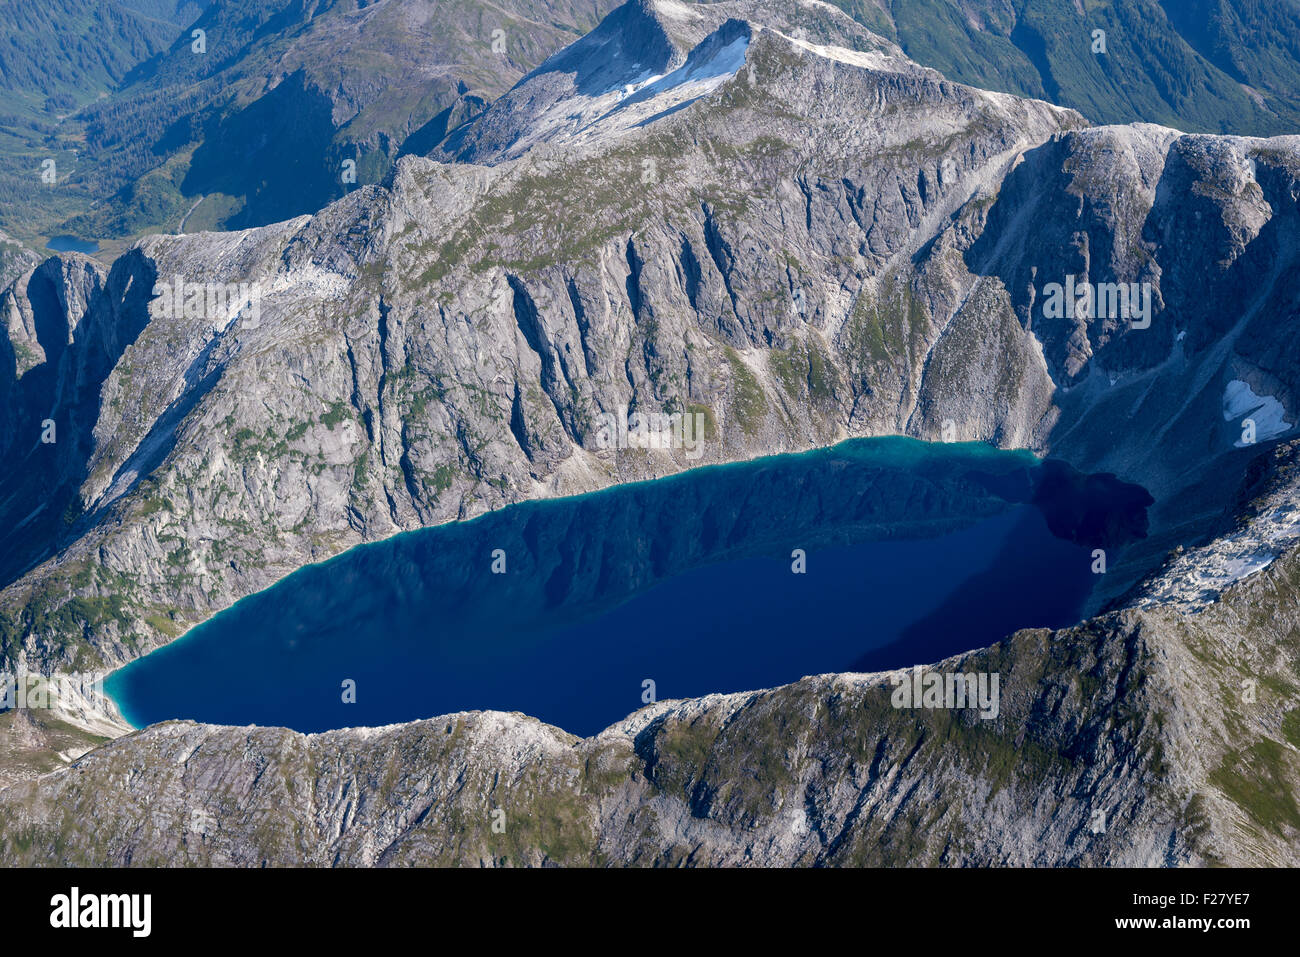 Indigo Lake, an alpine lake in the mountains of Baranof Island, Alaska. Stock Photo